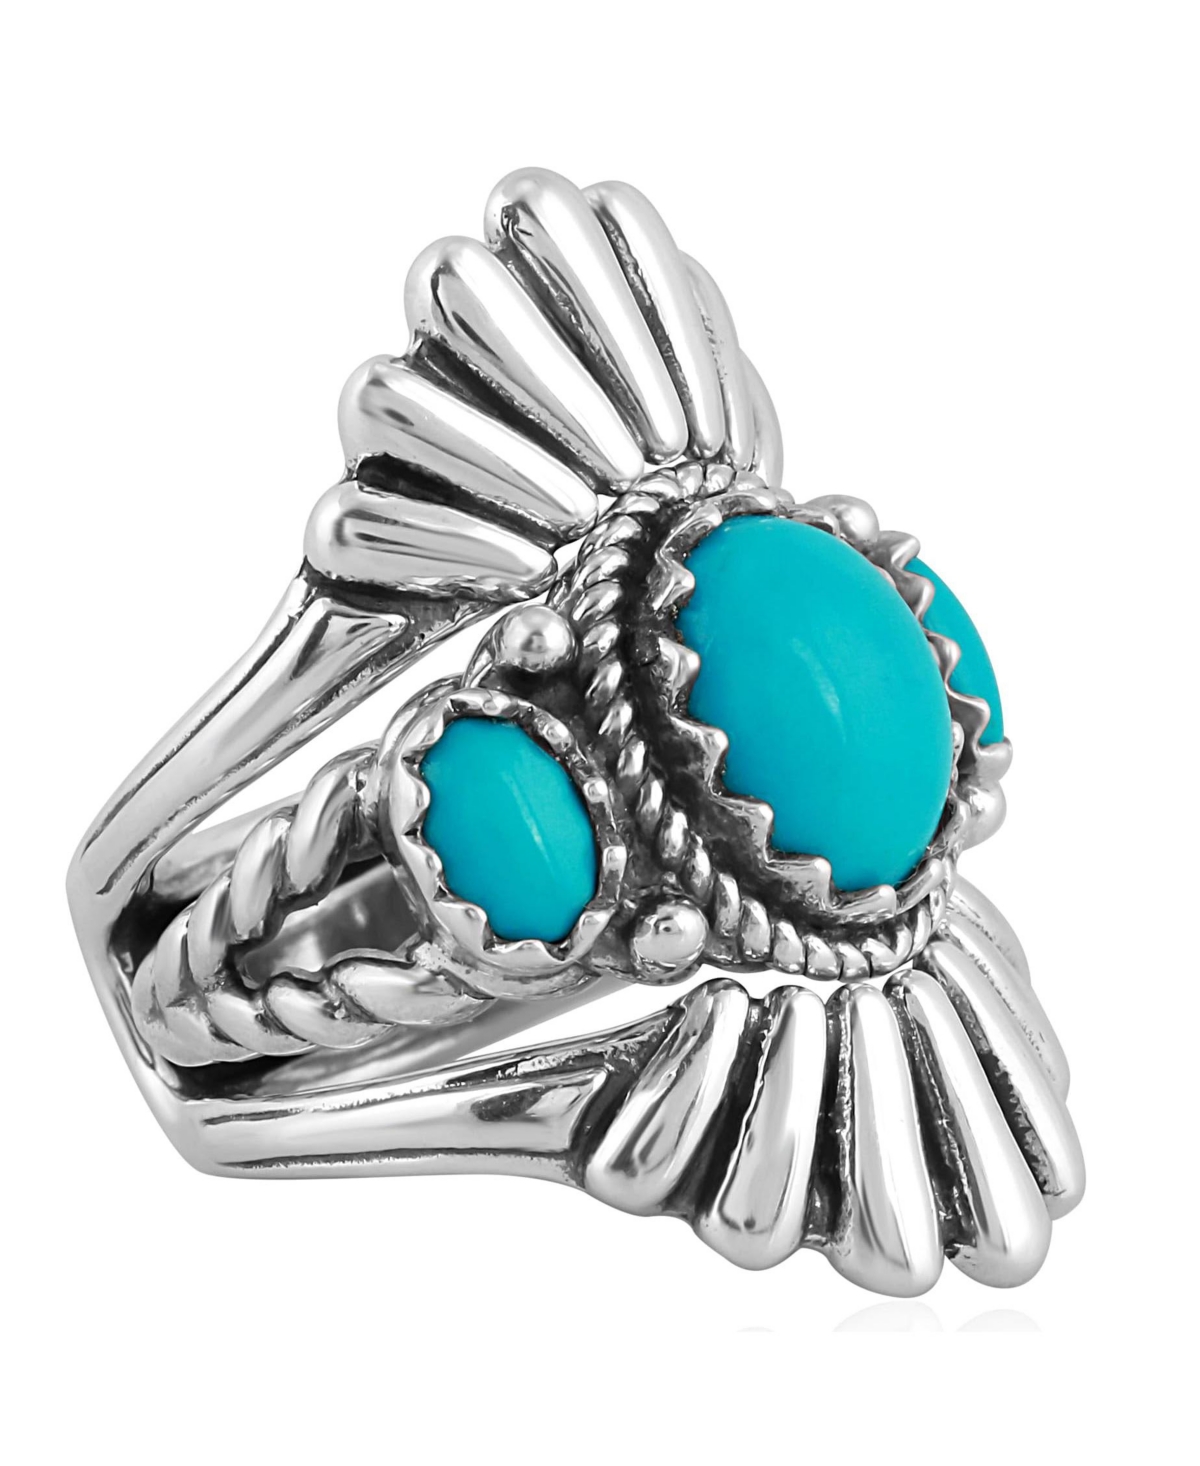 Genuine Sleeping Beauty Turquoise Sterling Silver Crown Ring, Sizes 5-10 - Sleeping beauty turquoise